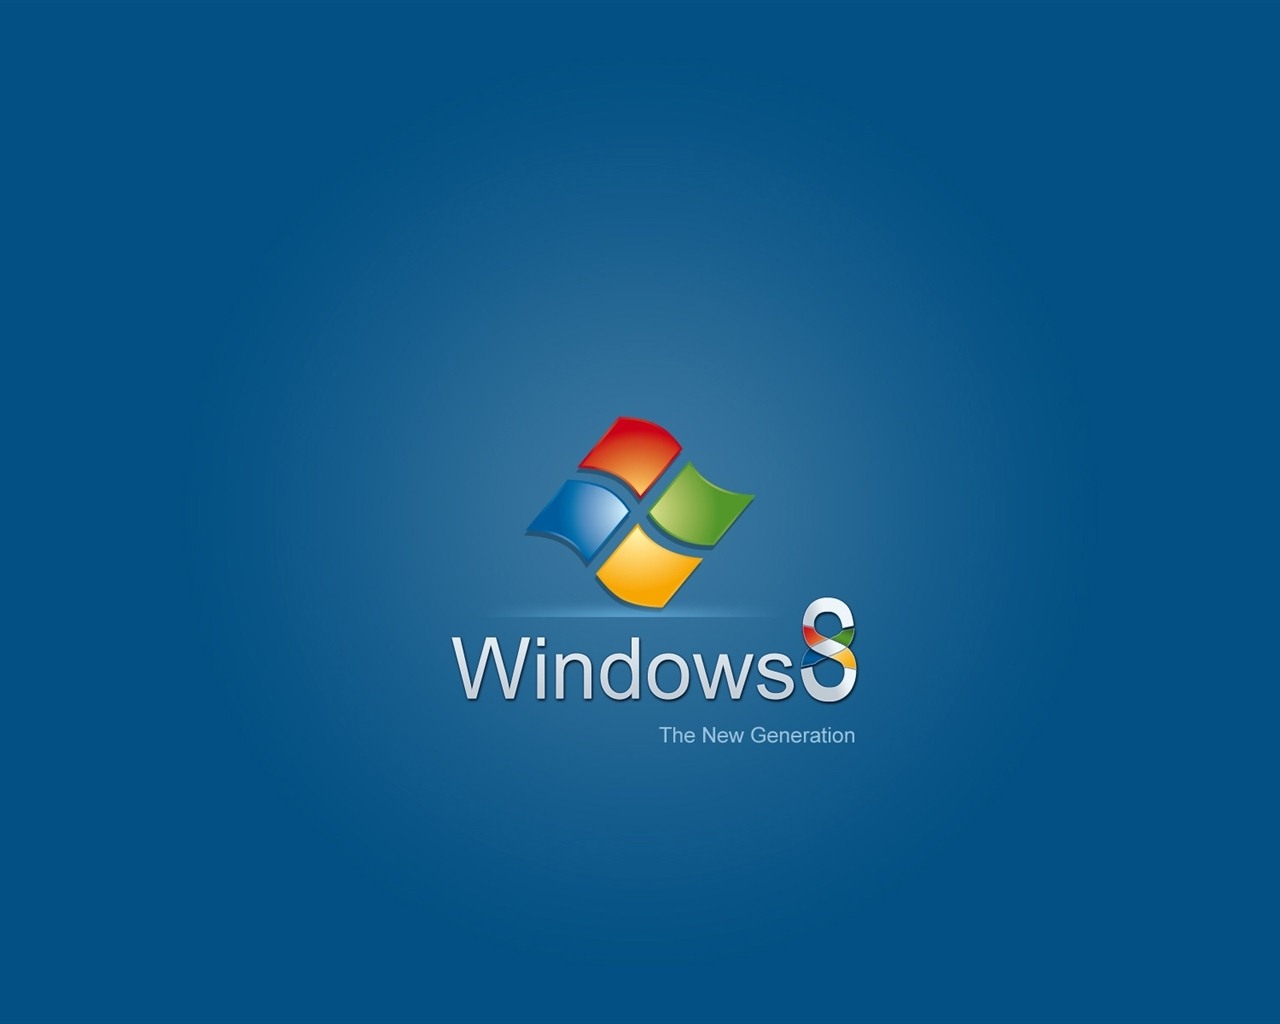 Windows 8 主题壁纸 (二)2 - 1280x1024